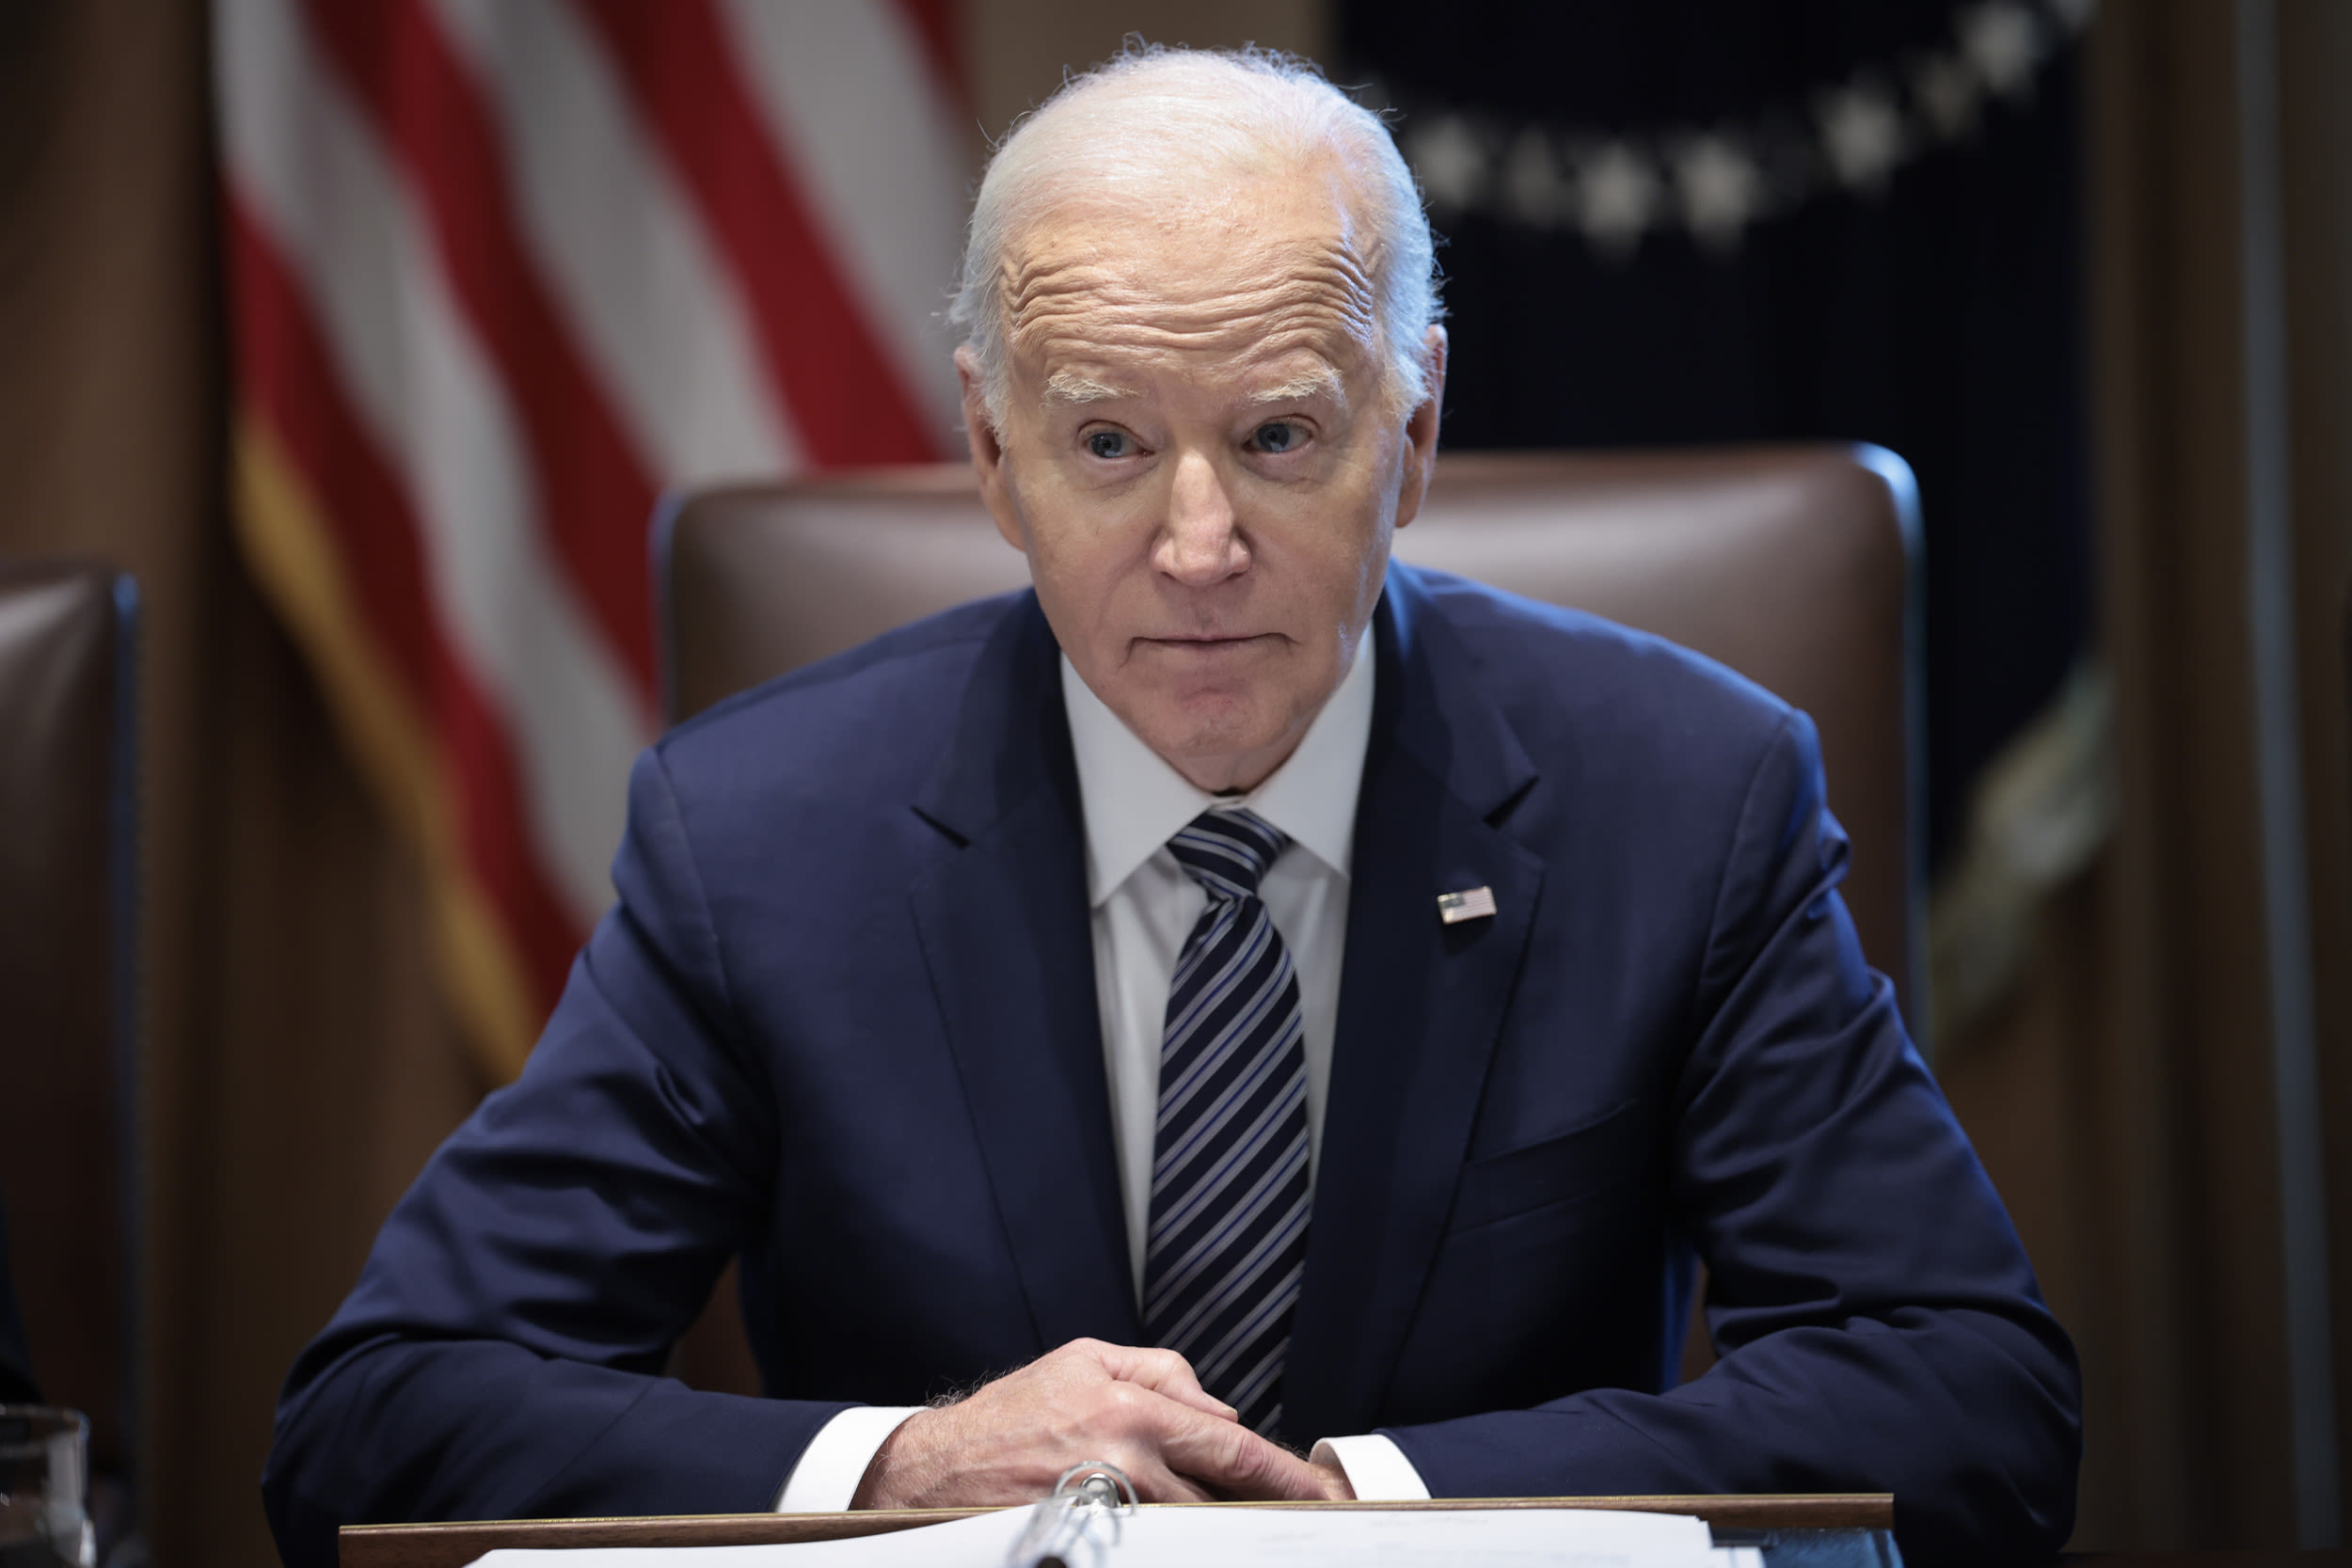 Joe Biden faces another headache over ICC's Netanyahu move